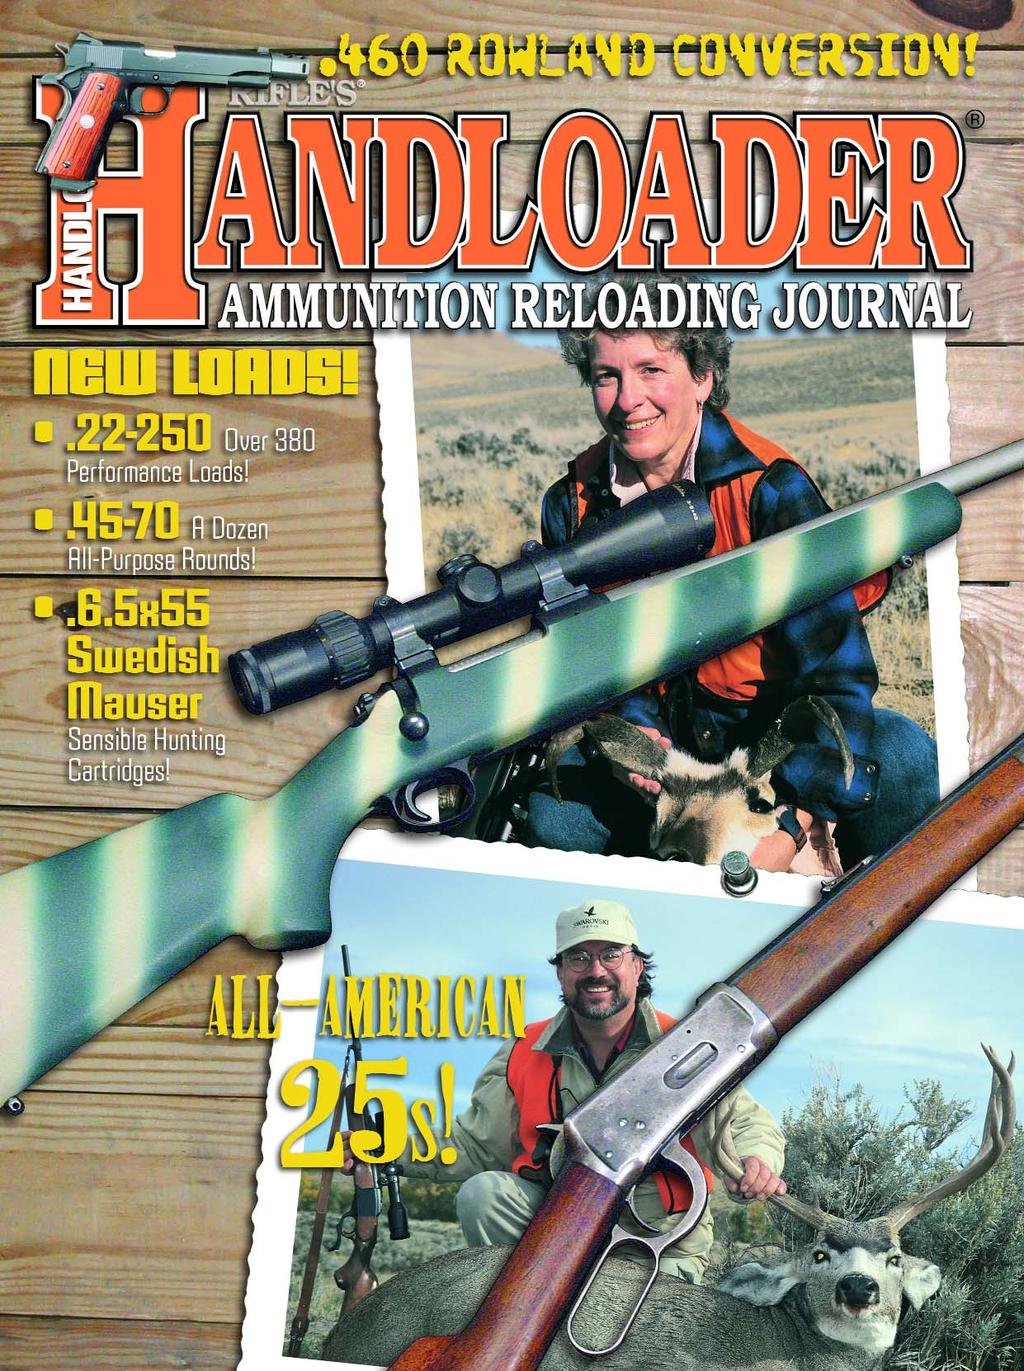 June 2007 No. 247 Rifle Magazine Presents - HANDLOADER $4.